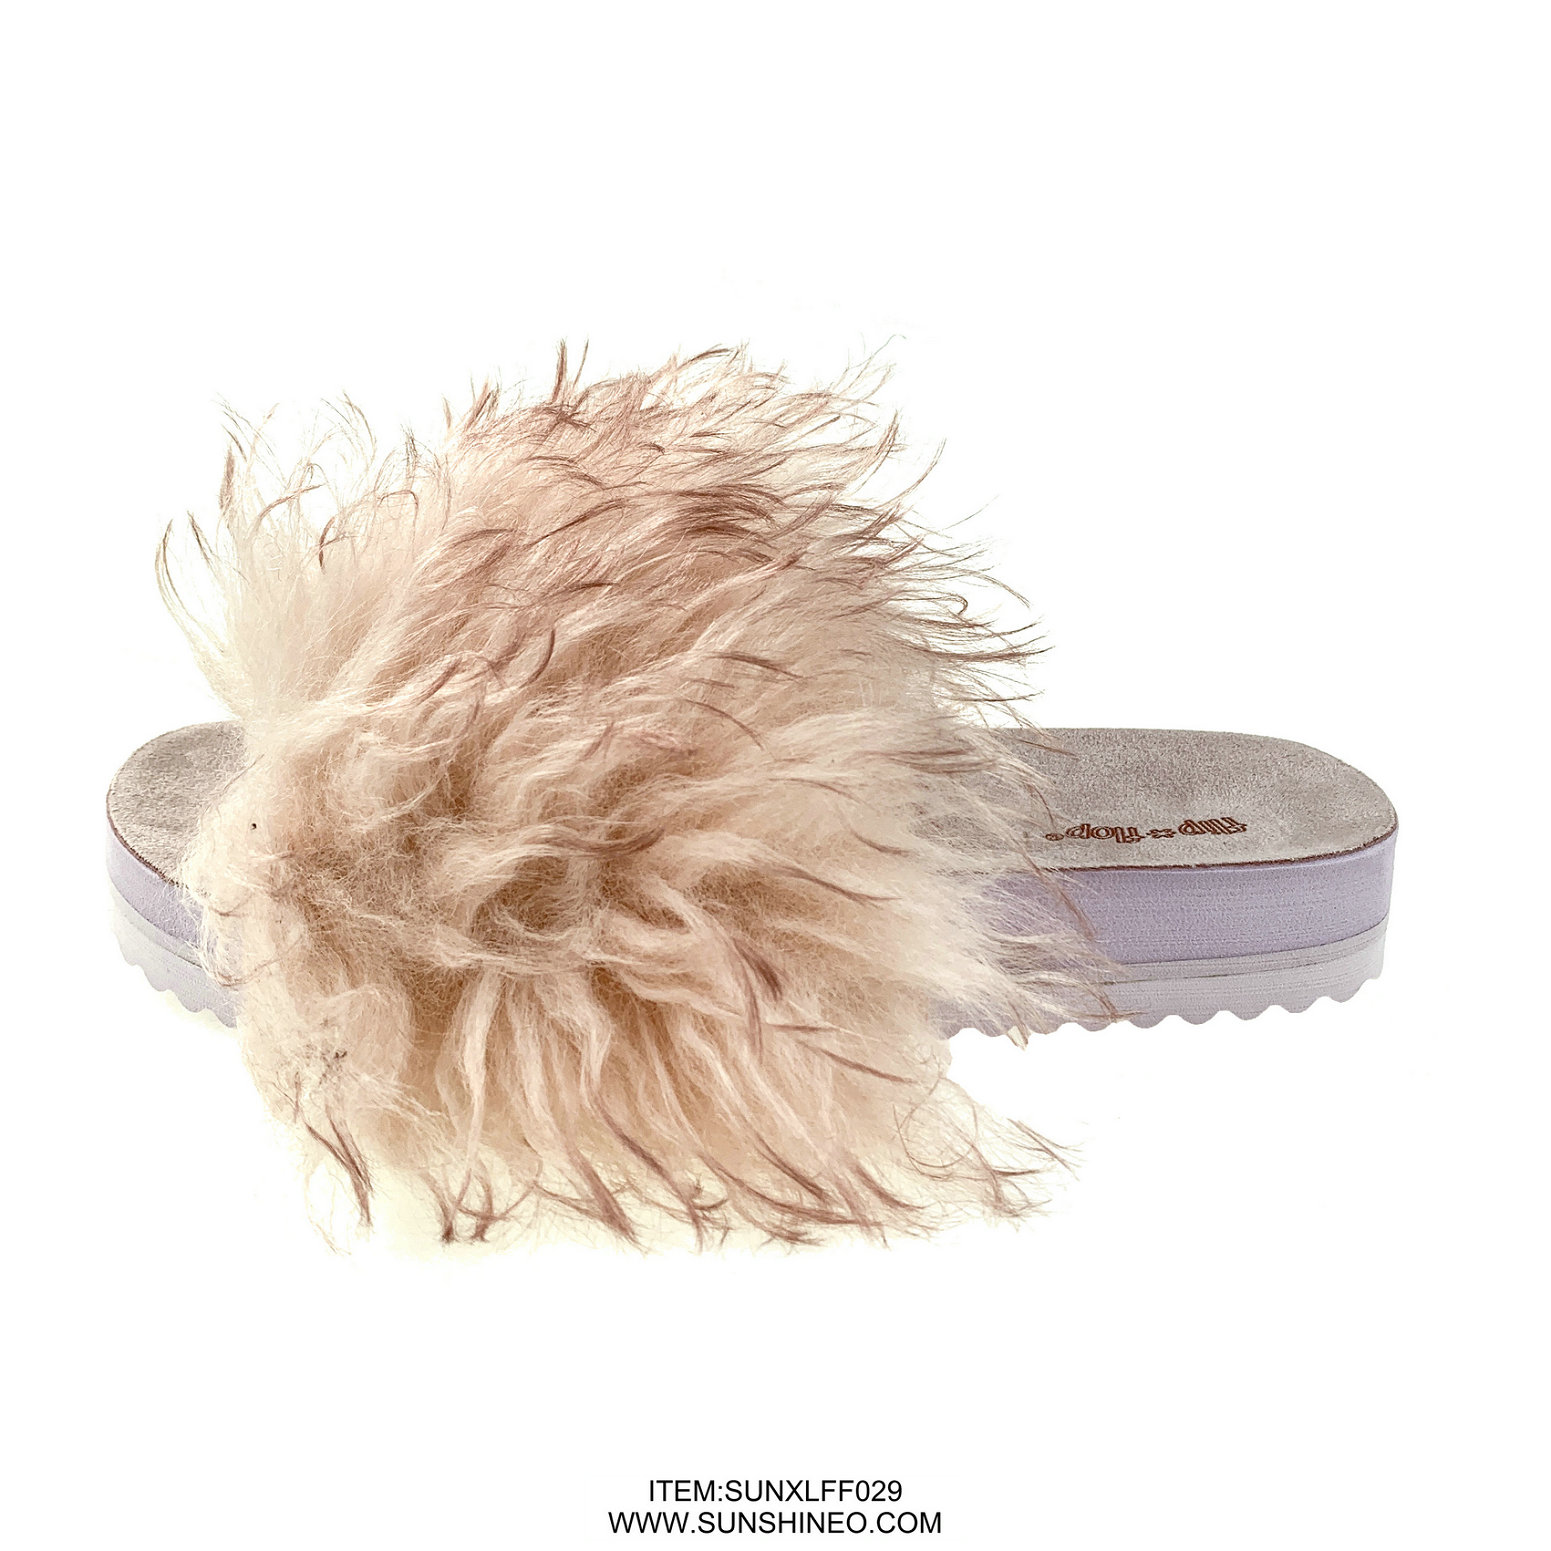 SUNXLFF029 fur flip flop sandals winter slippers